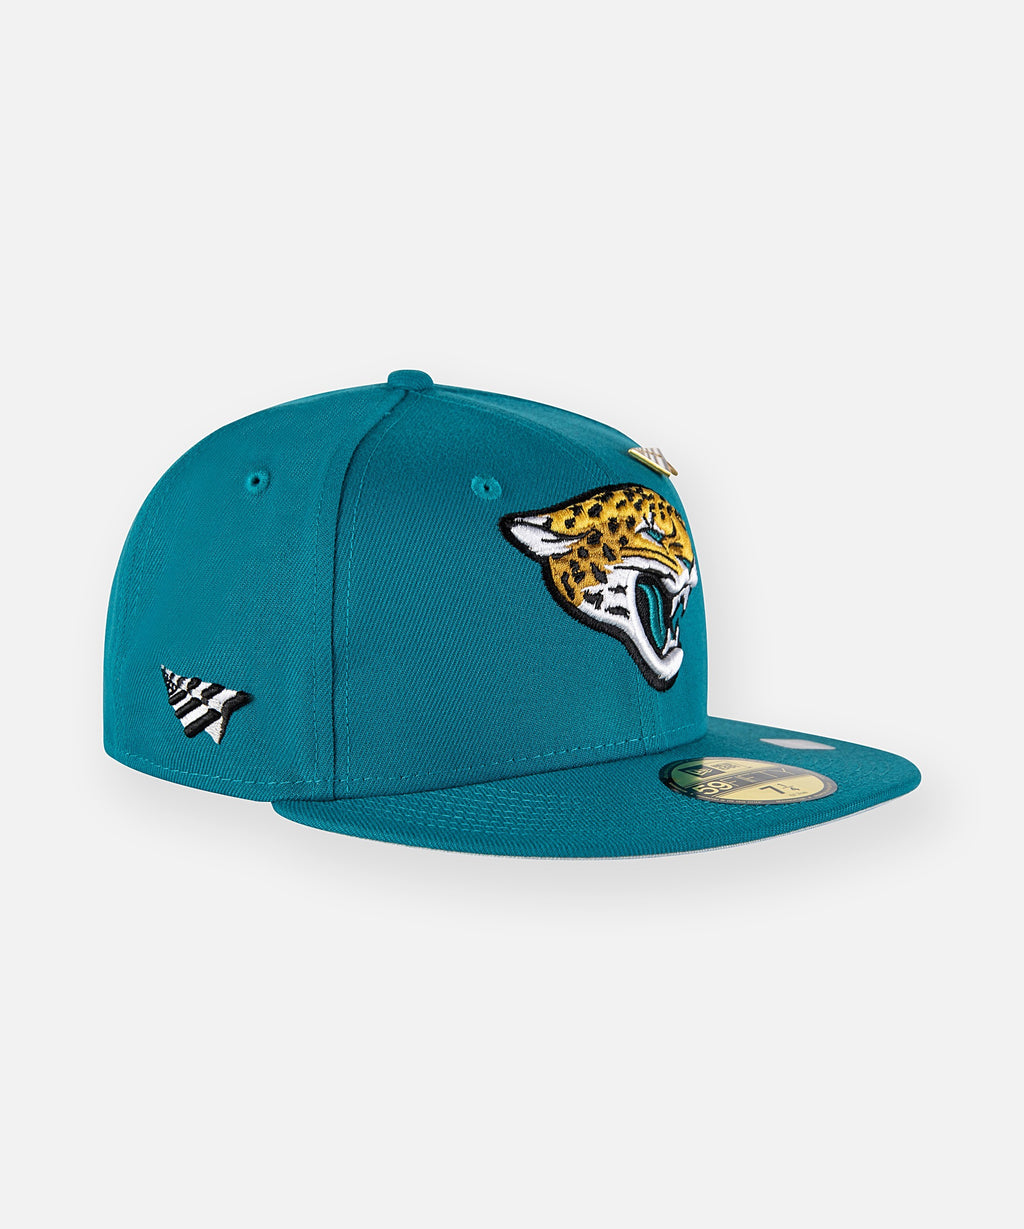 Paper Planes x Jacksonville Jaguars Team Color 59Fifty Fitted Hat_For Men_2